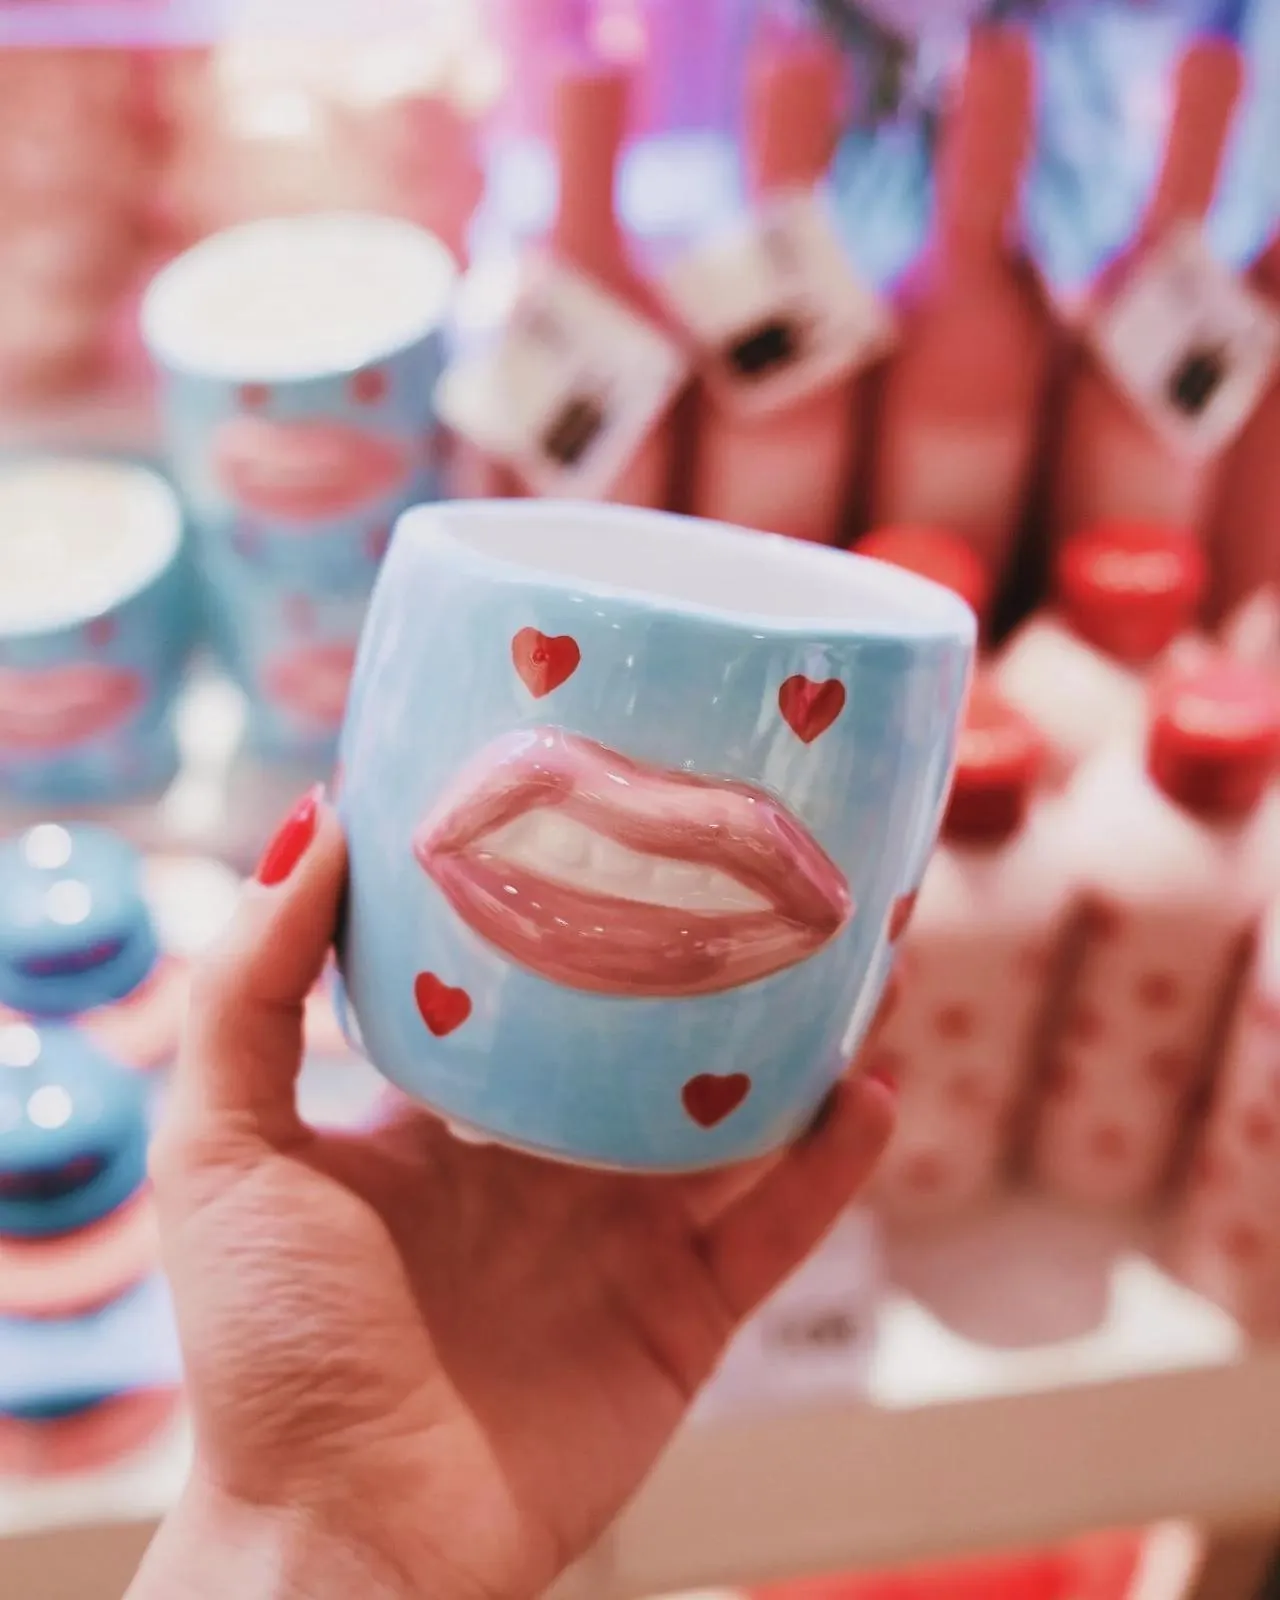 Hand holding a charming blue mug with lips design